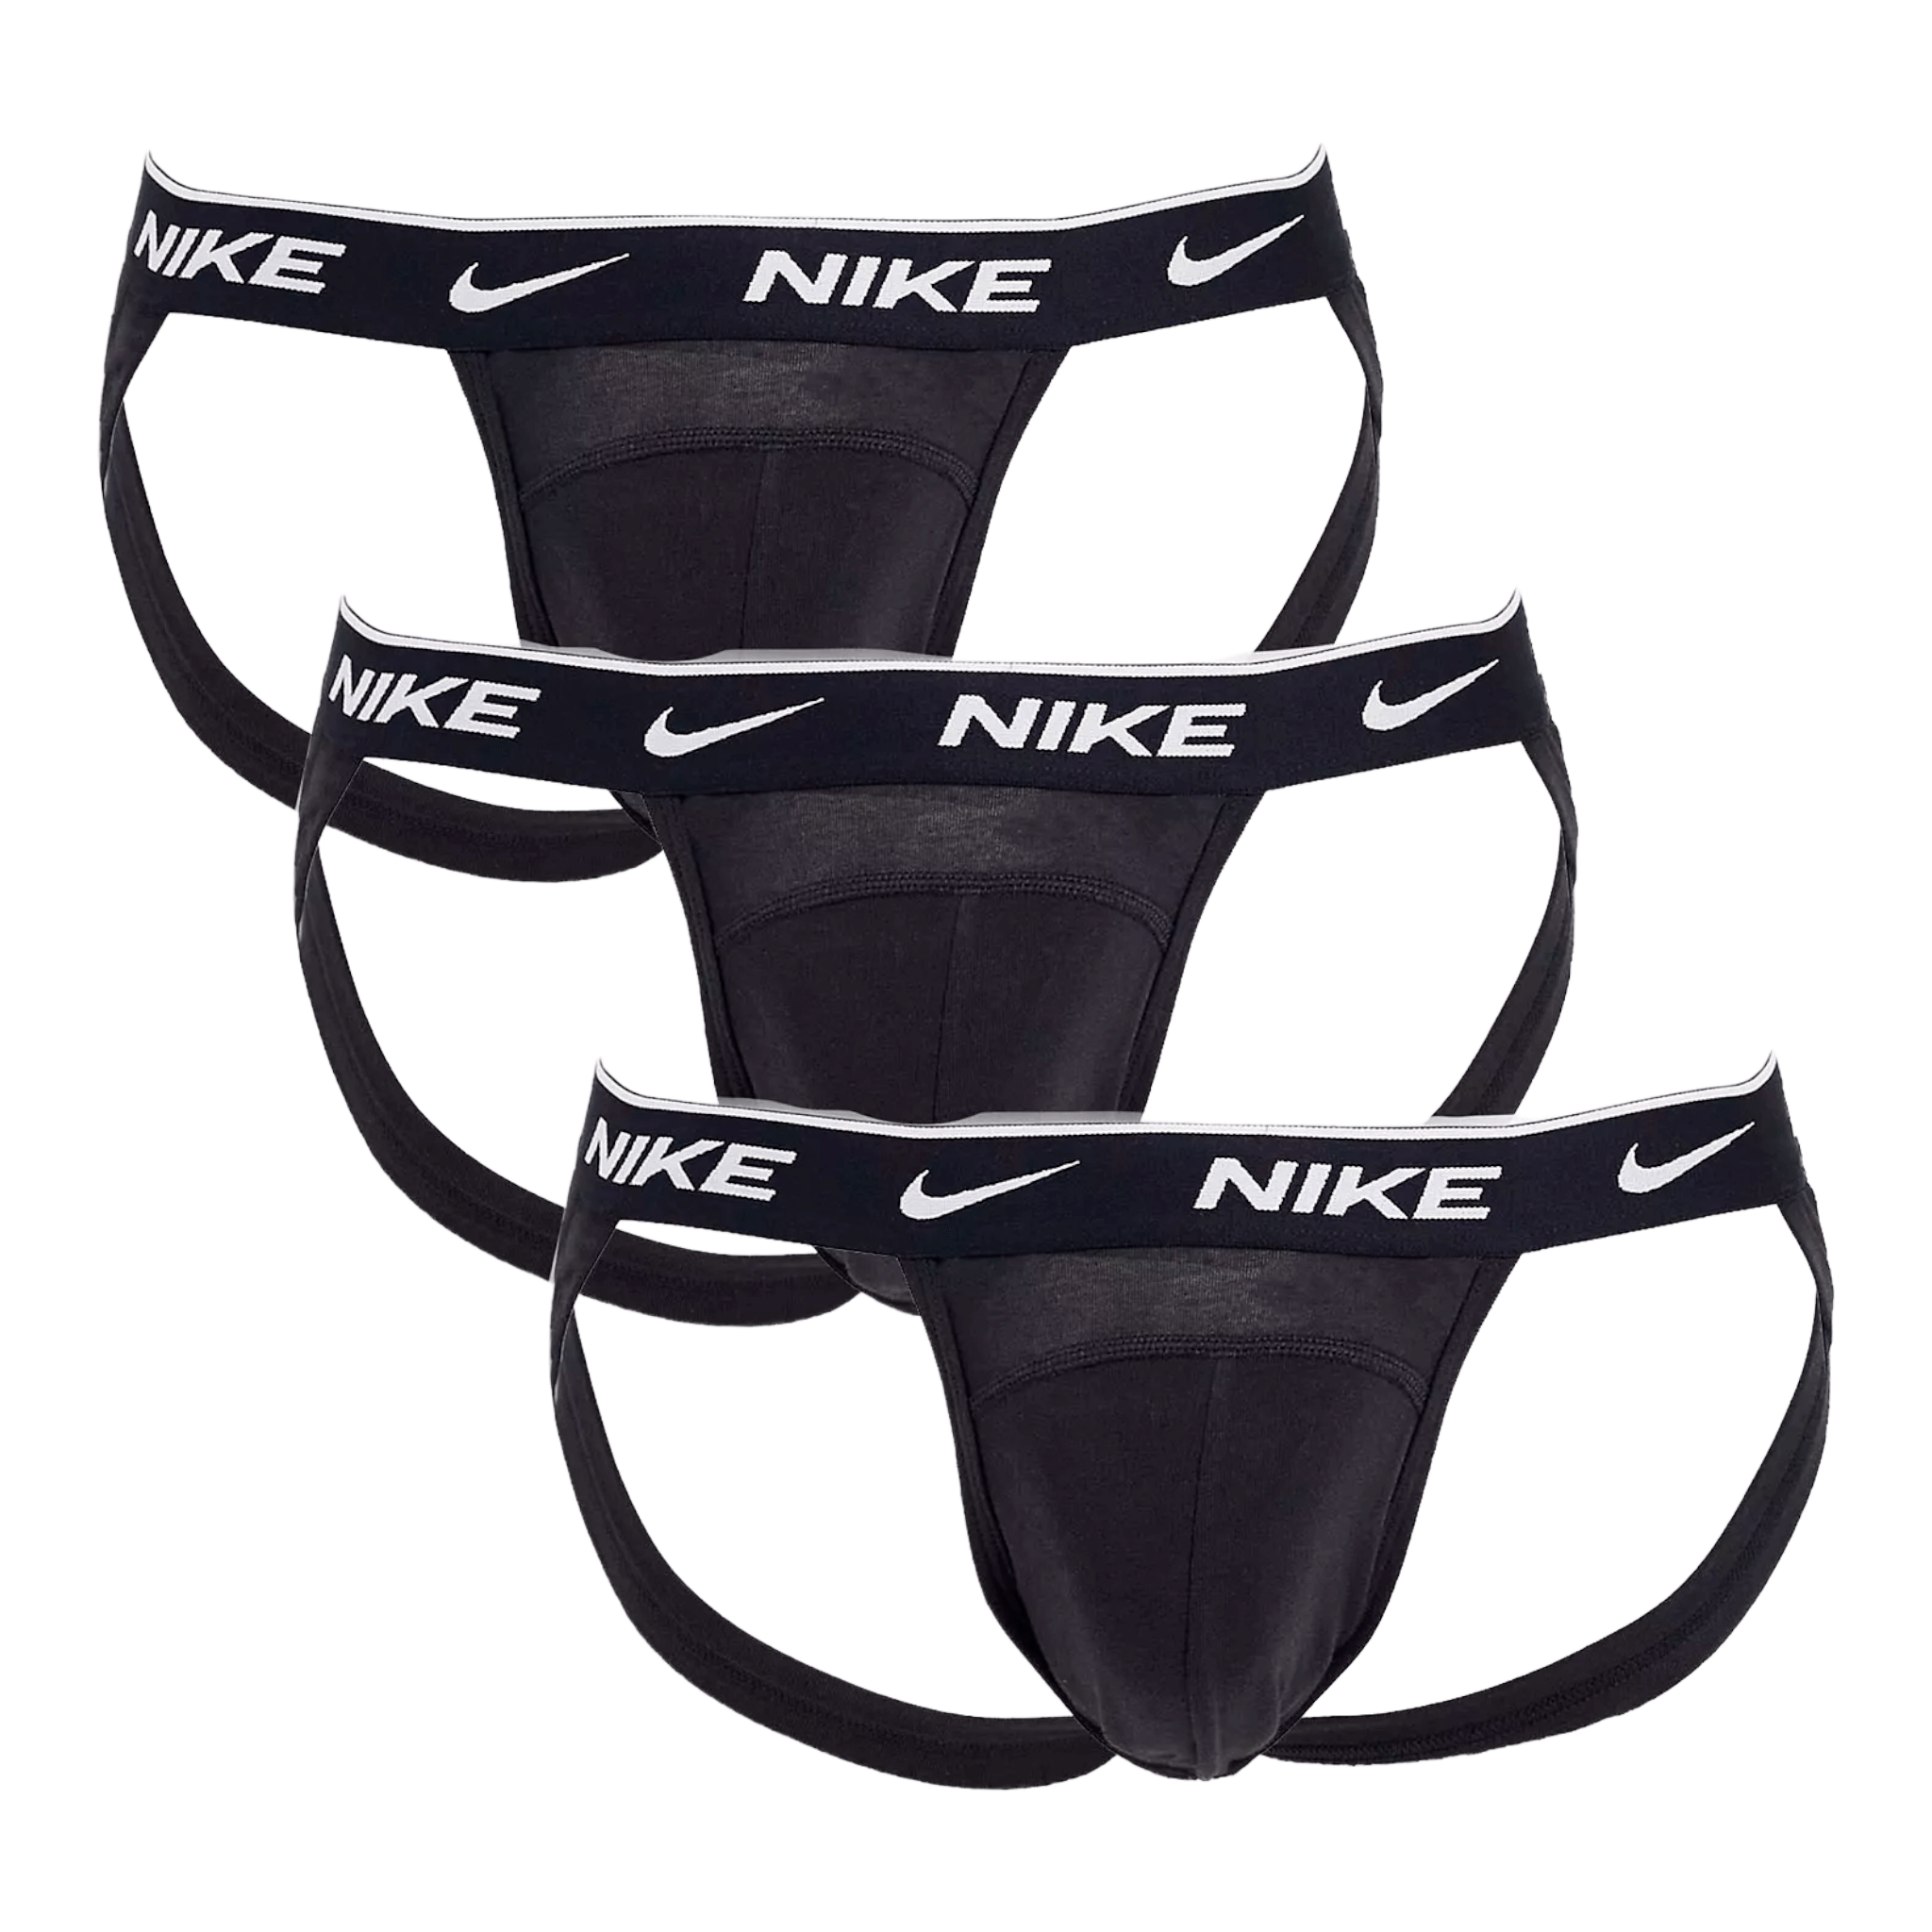 Трусы Nike 3 Pack Cotton Stretch, 3 предмета, черный 3 pack trunks cotton stretch